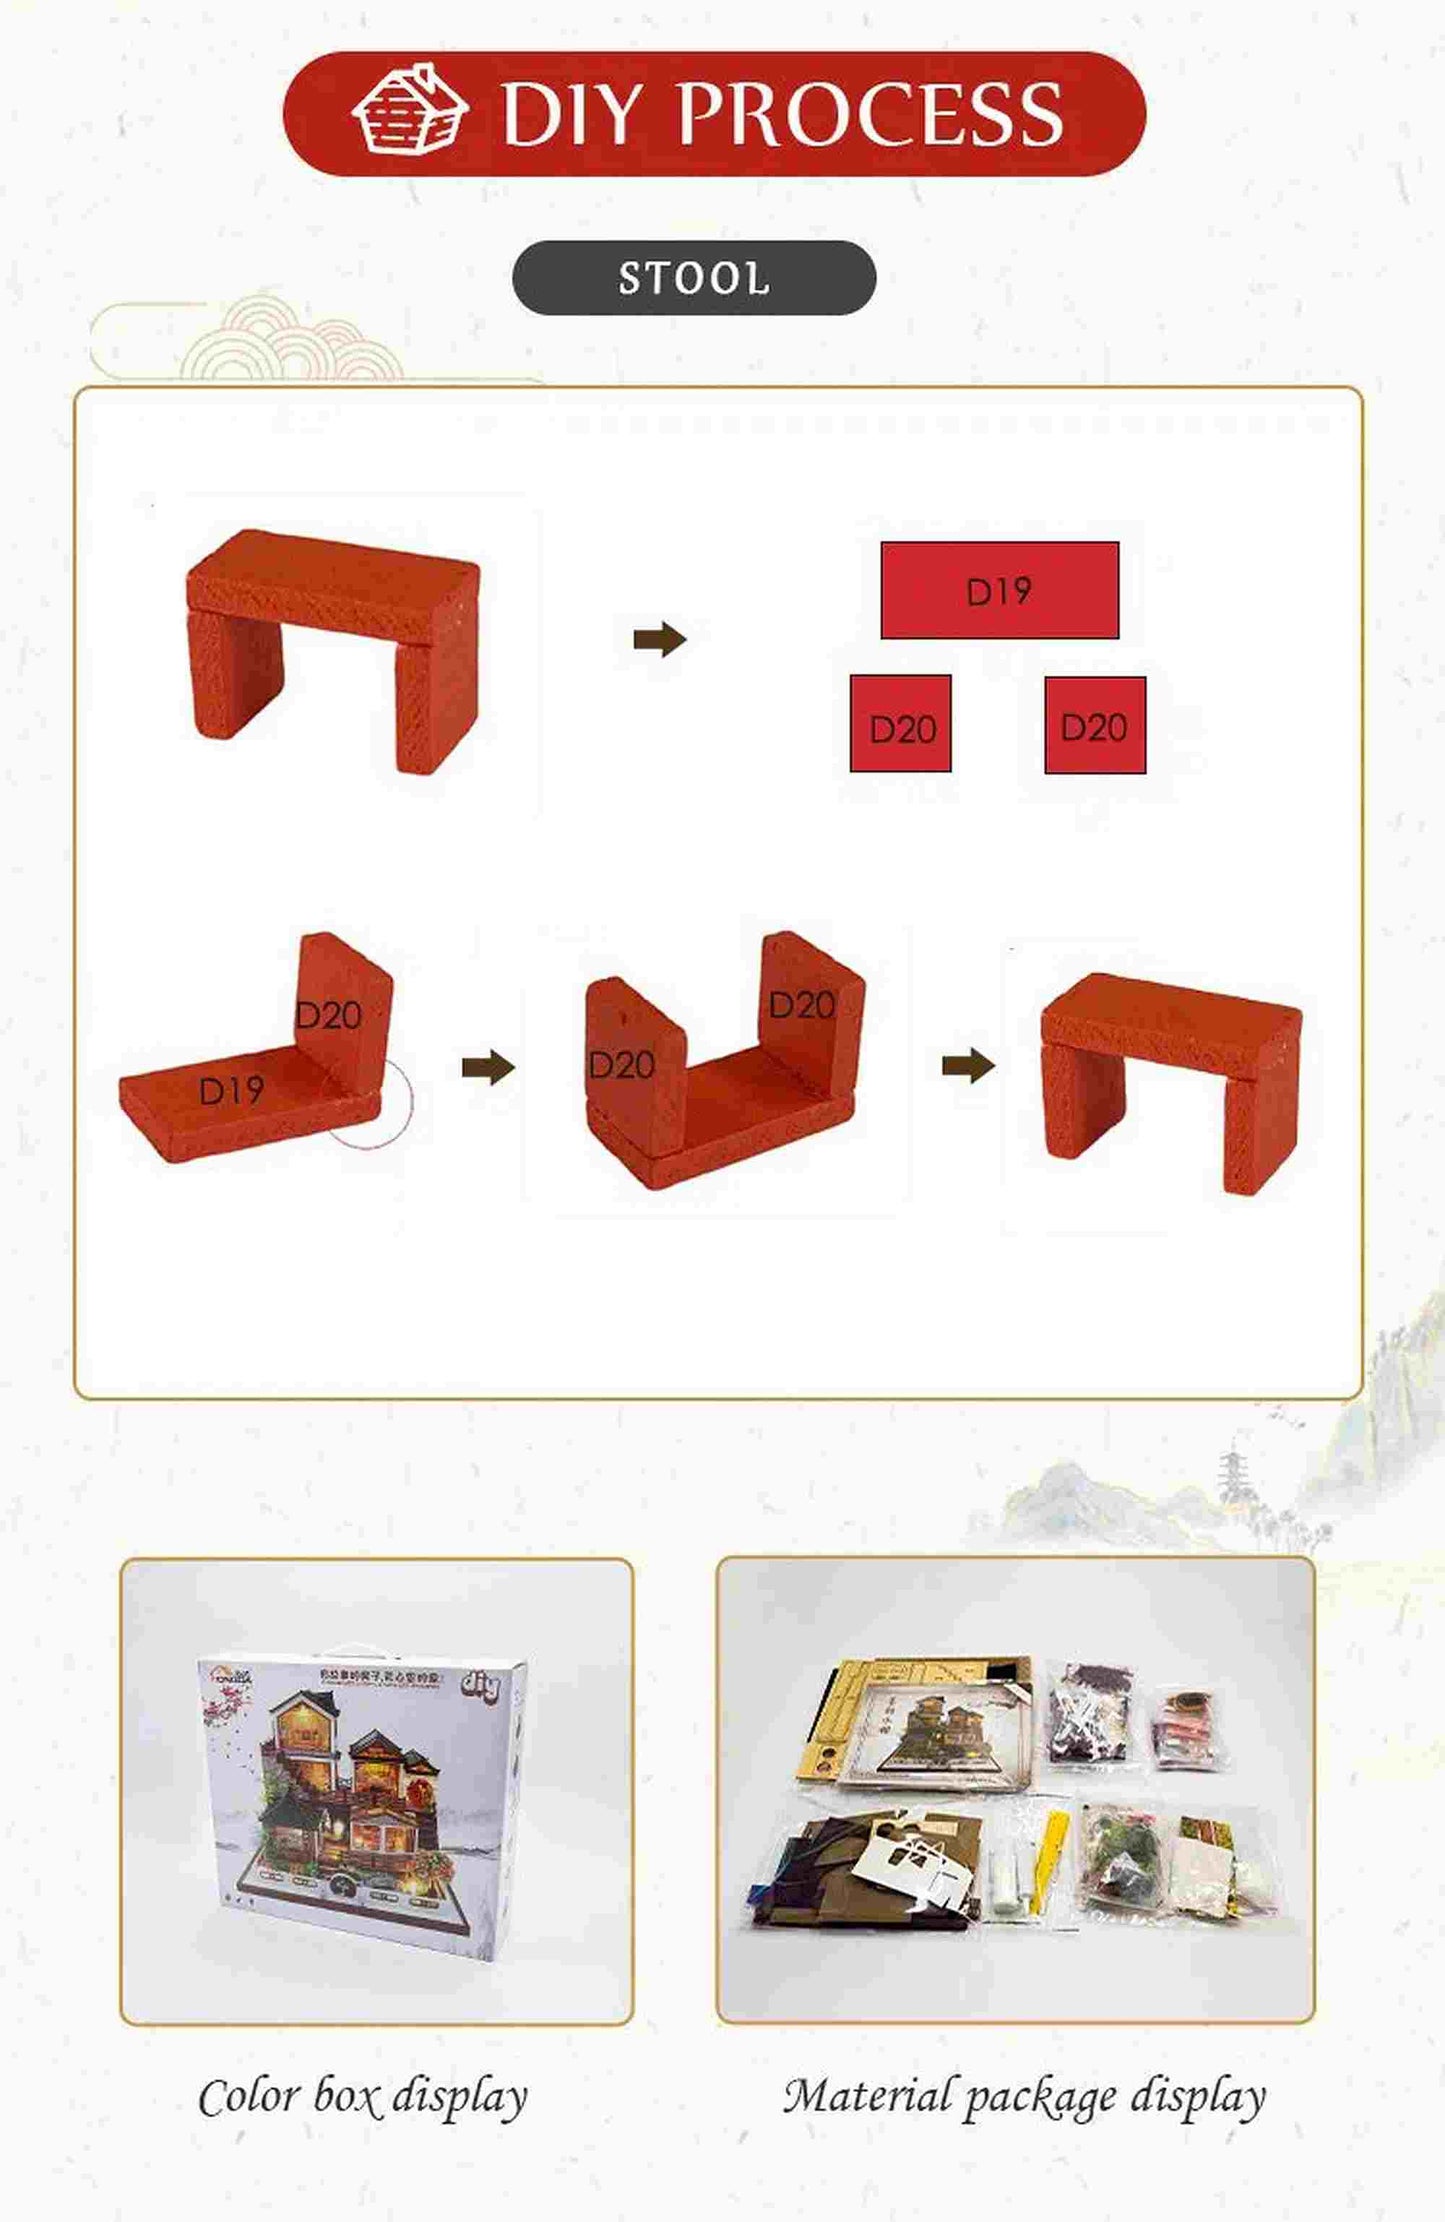 Hongda Wooden Miniature Dollhouse Furniture Kits "Ink Elegant Pavilion" (L2122) w/LED Lights, and Glues